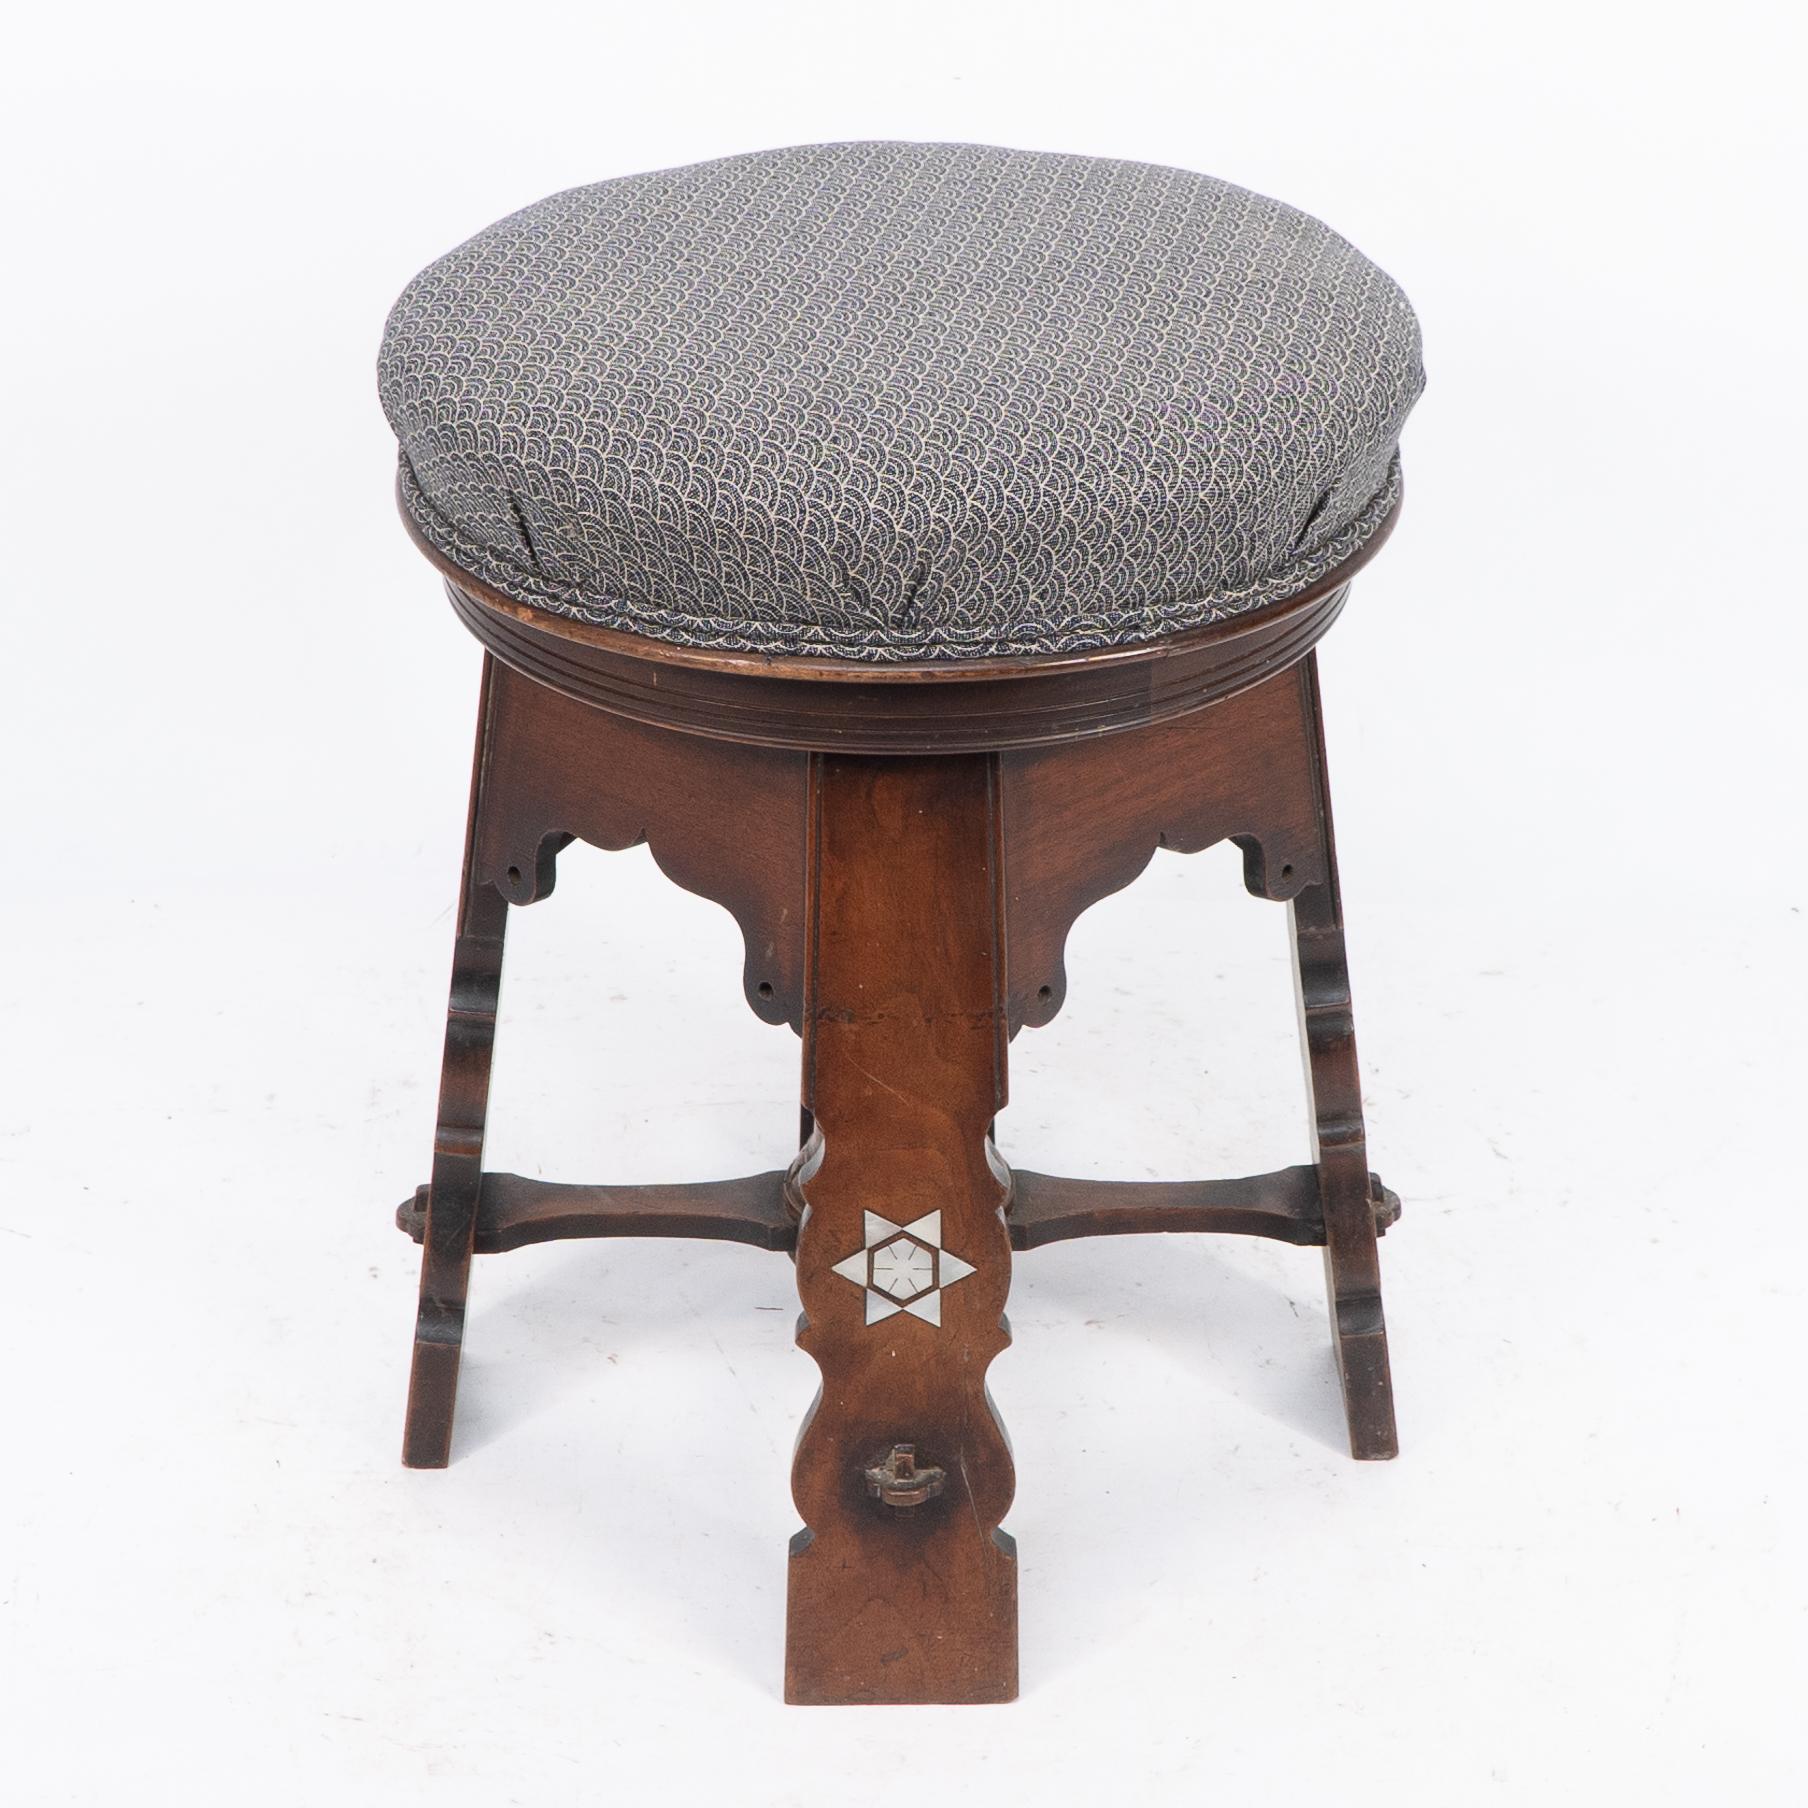 English Liberty and Co attri. A rare Moorish walnut revolving stool with Moorish arches For Sale